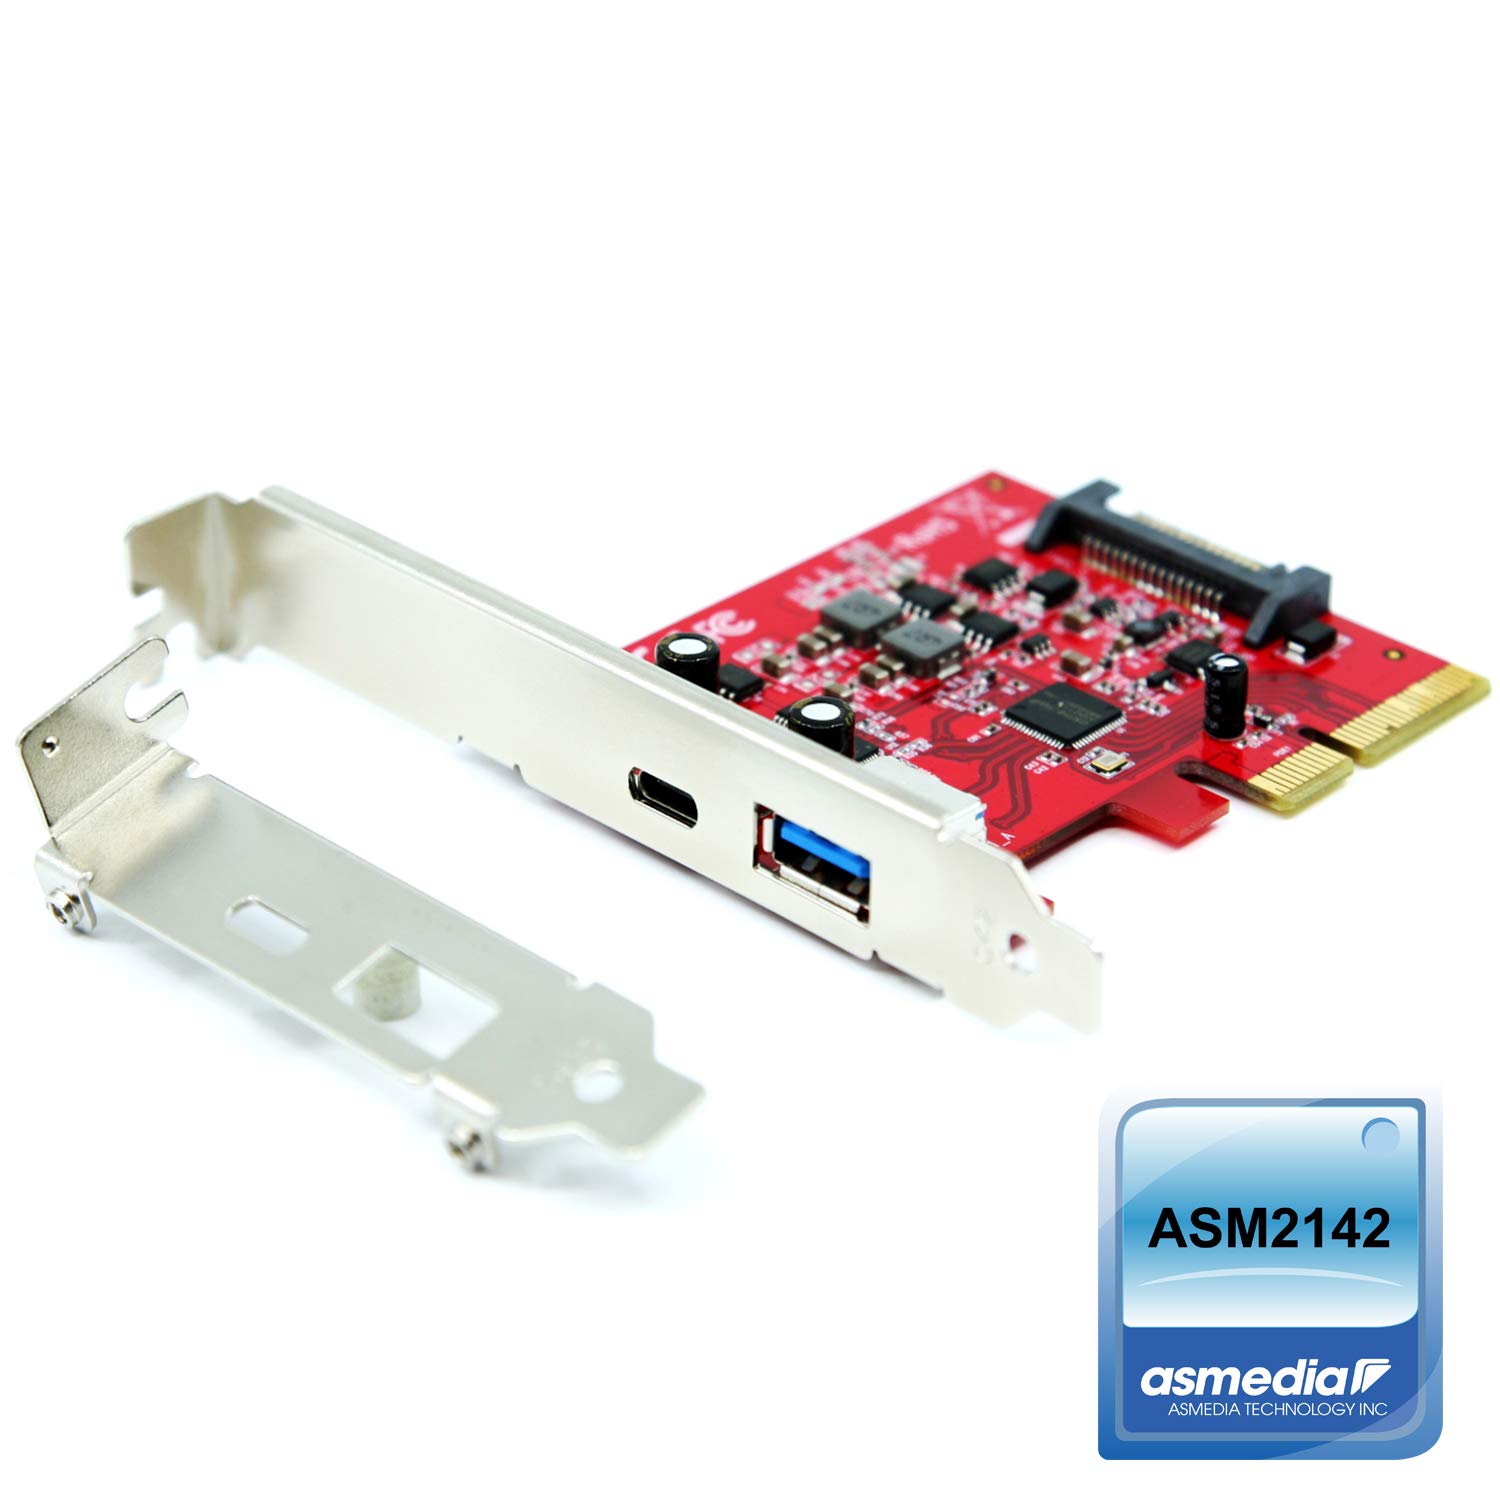 Fantom Drives PCIe USB 3.1 Gen 2 10Gbps Type-C タイプAホストアダプター - Asmedia 2142チップセット並行輸